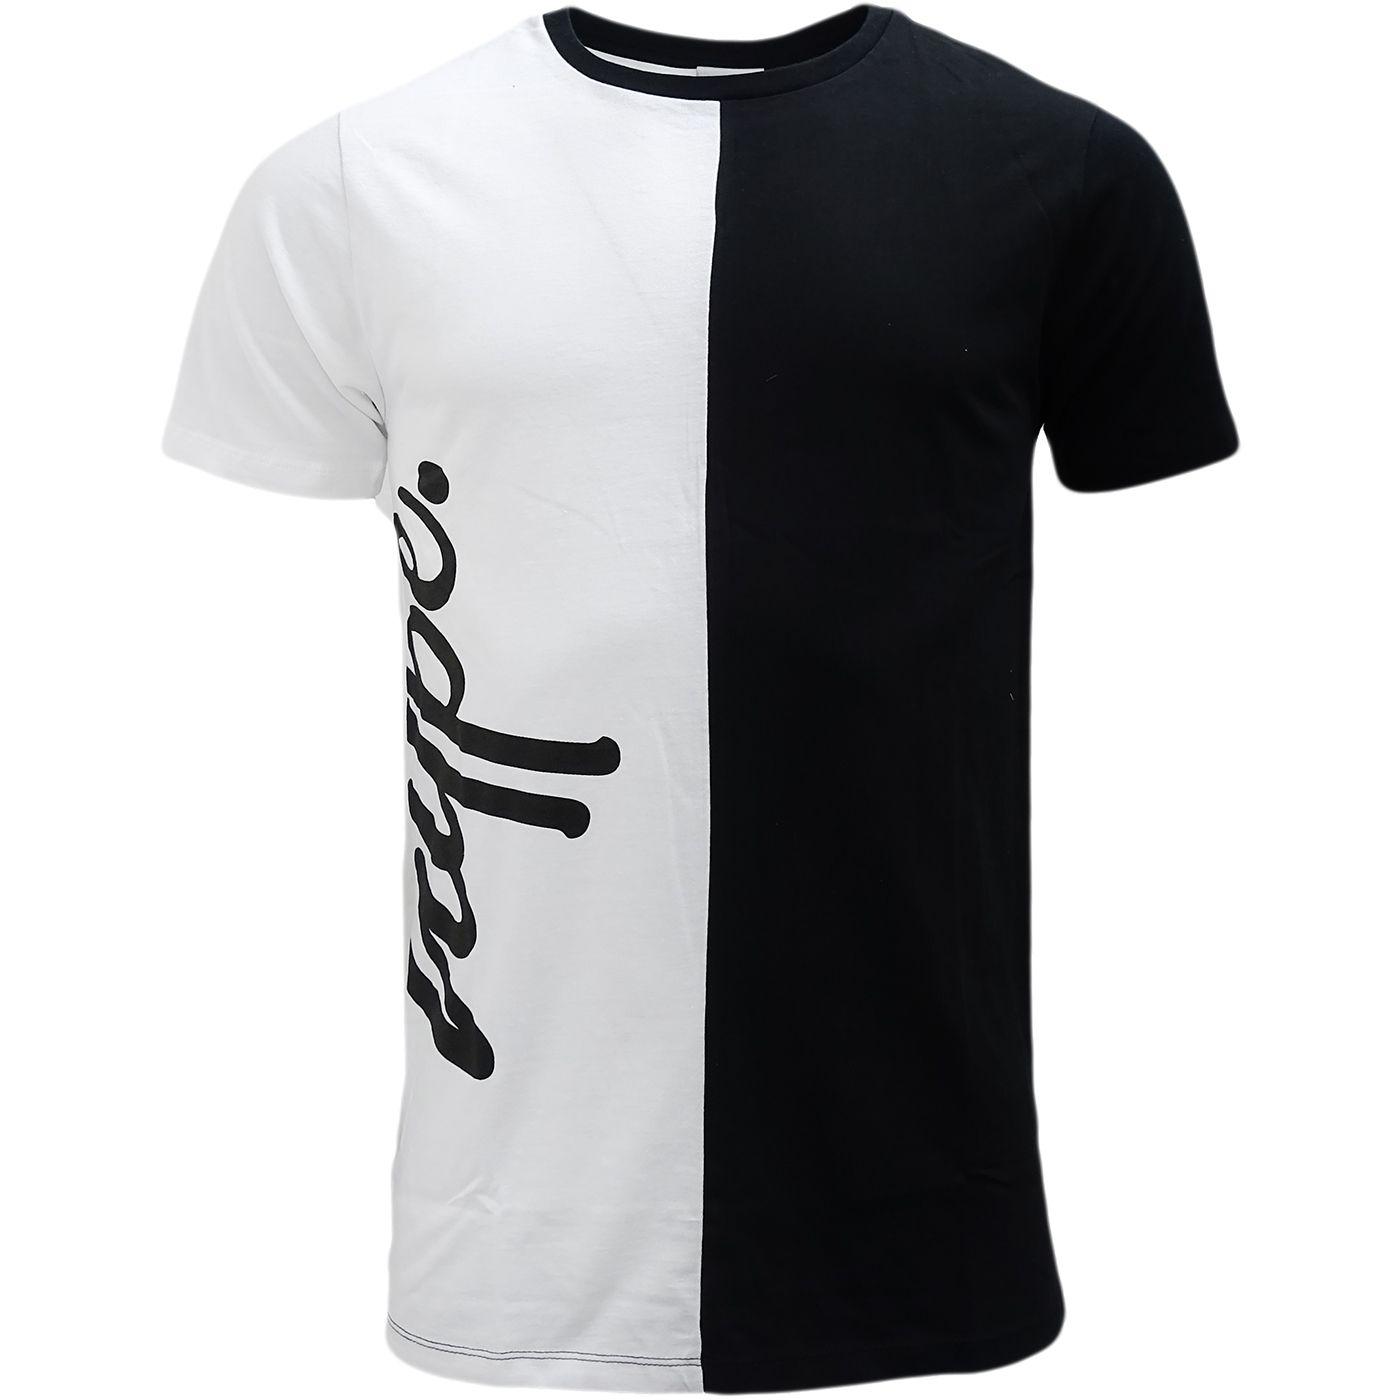 Half Black Half White Logo - Hype White / Black Half White / Half Black Split T-Shirt - Two Tone ...